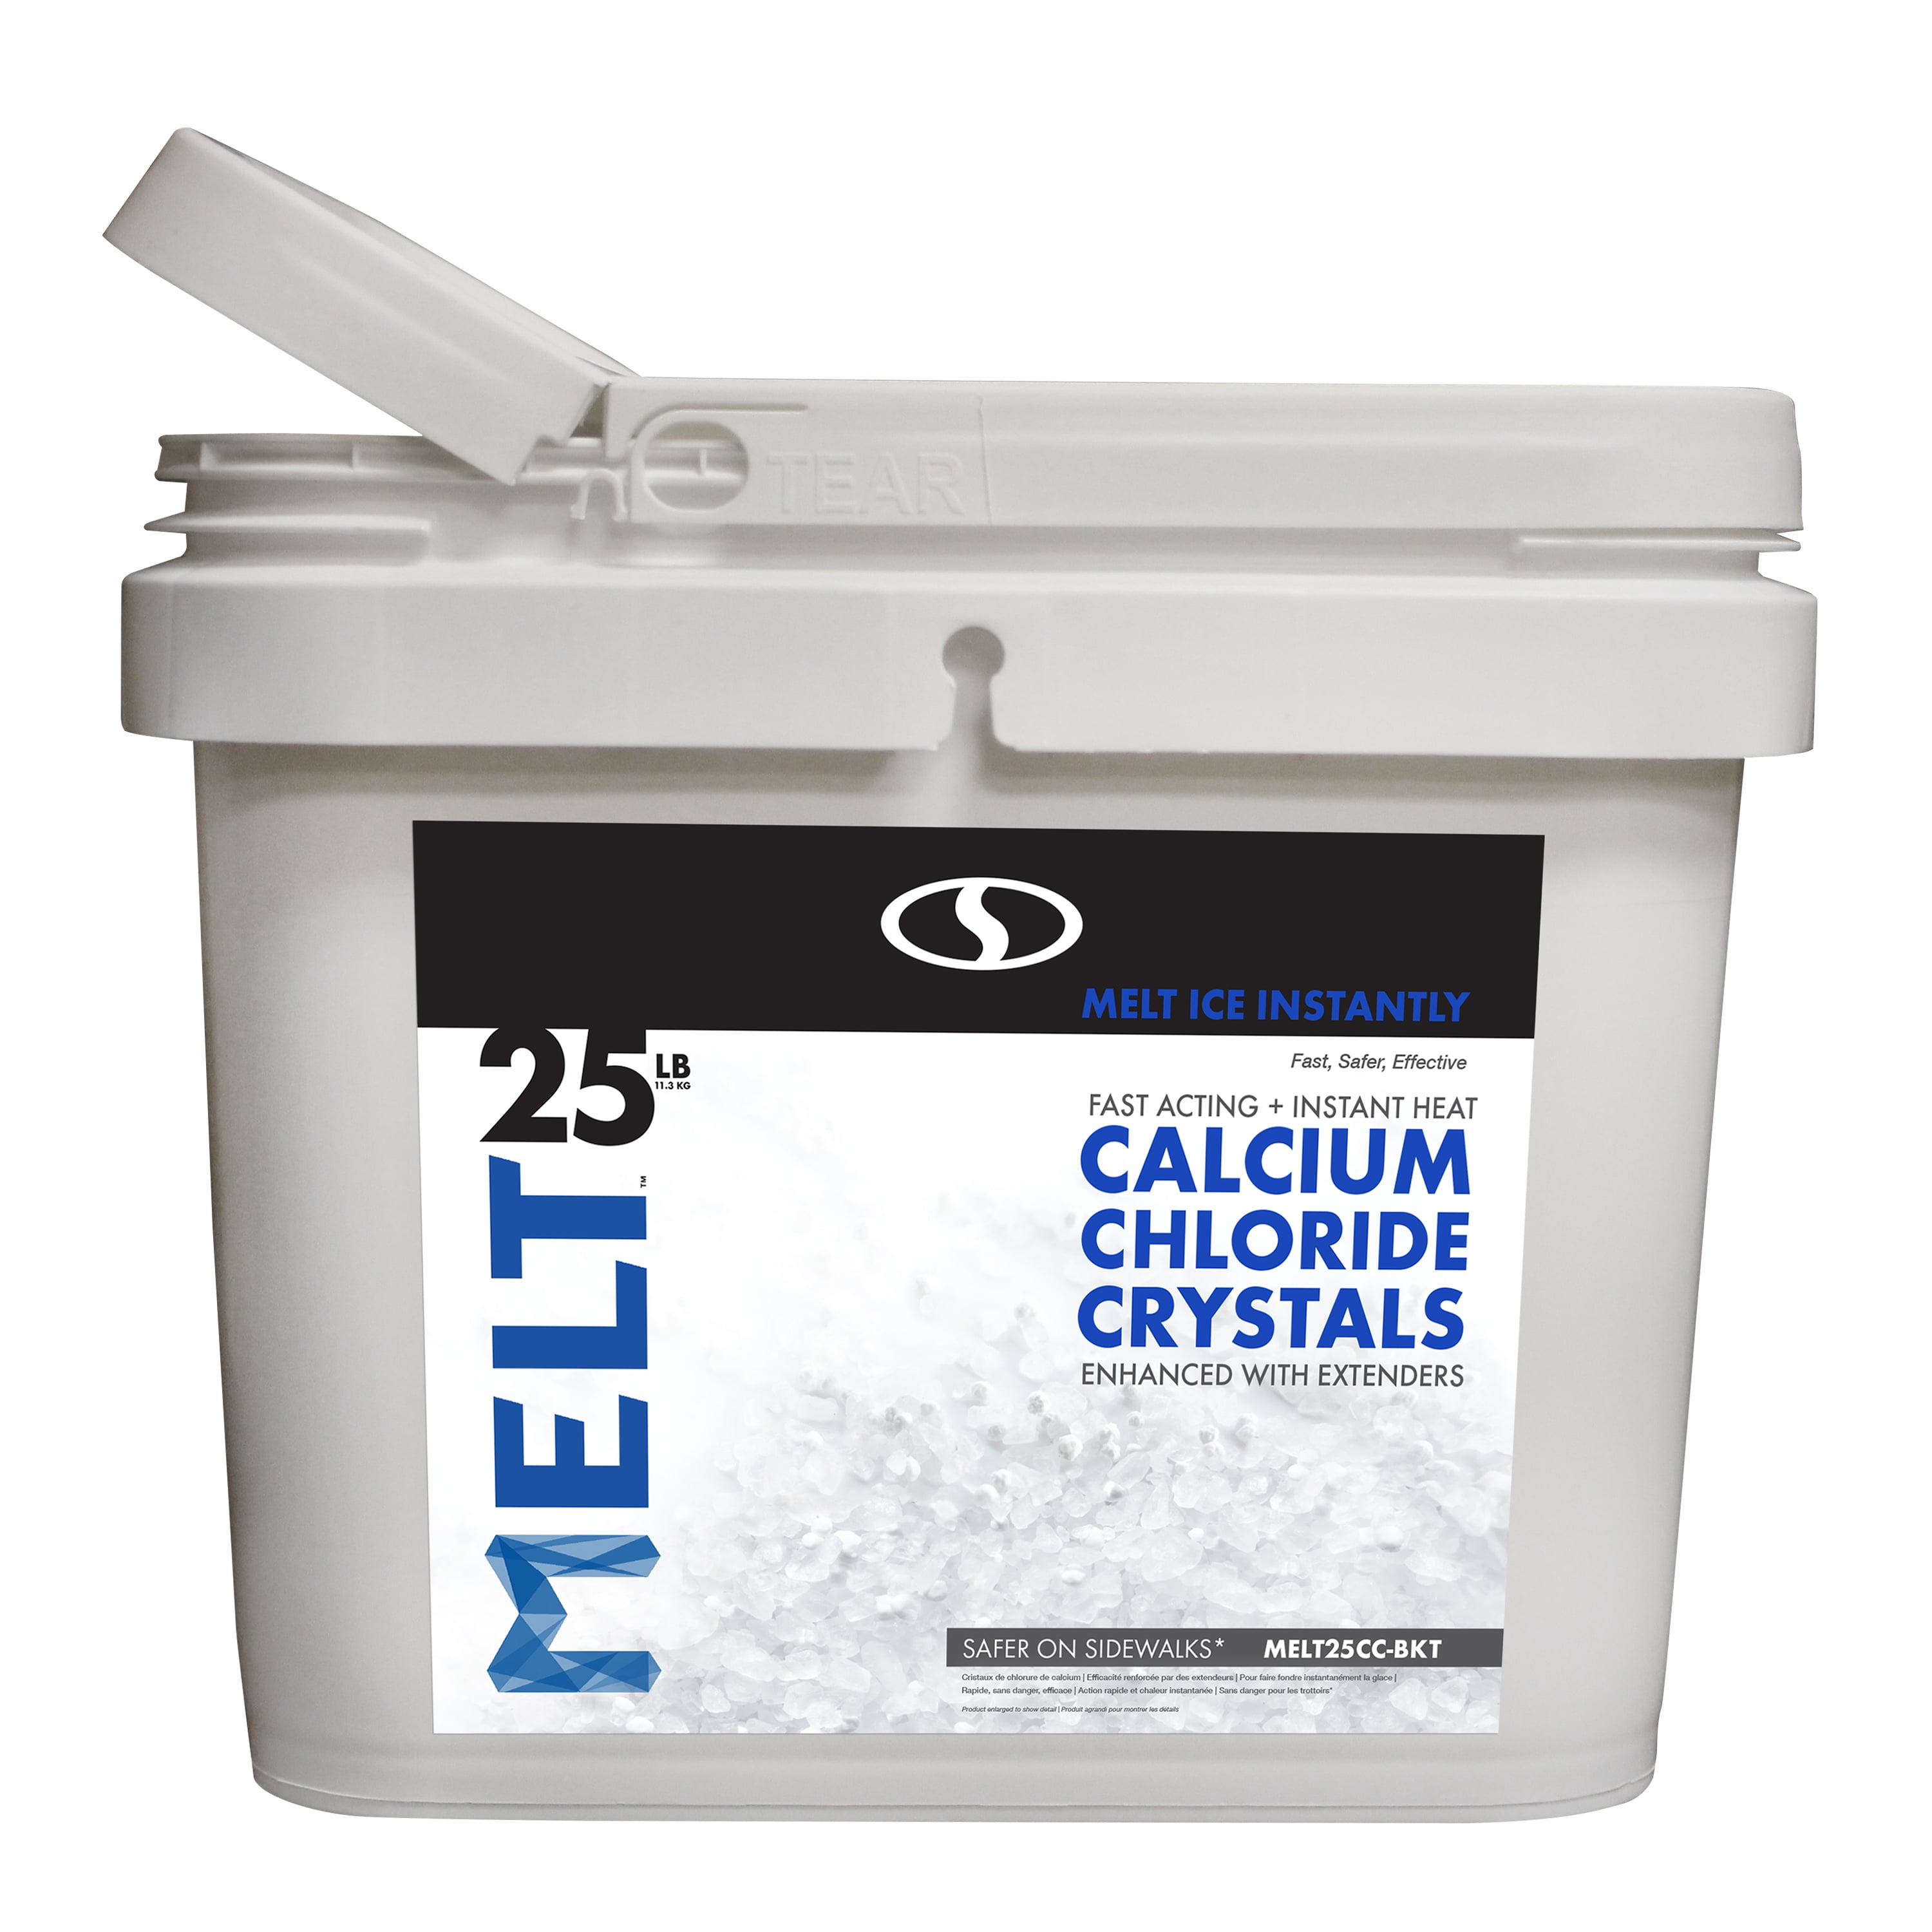 Morton Action Melt Fast Action Ice Melt Salt 12 lb jug, Water Filtration &  Treatment